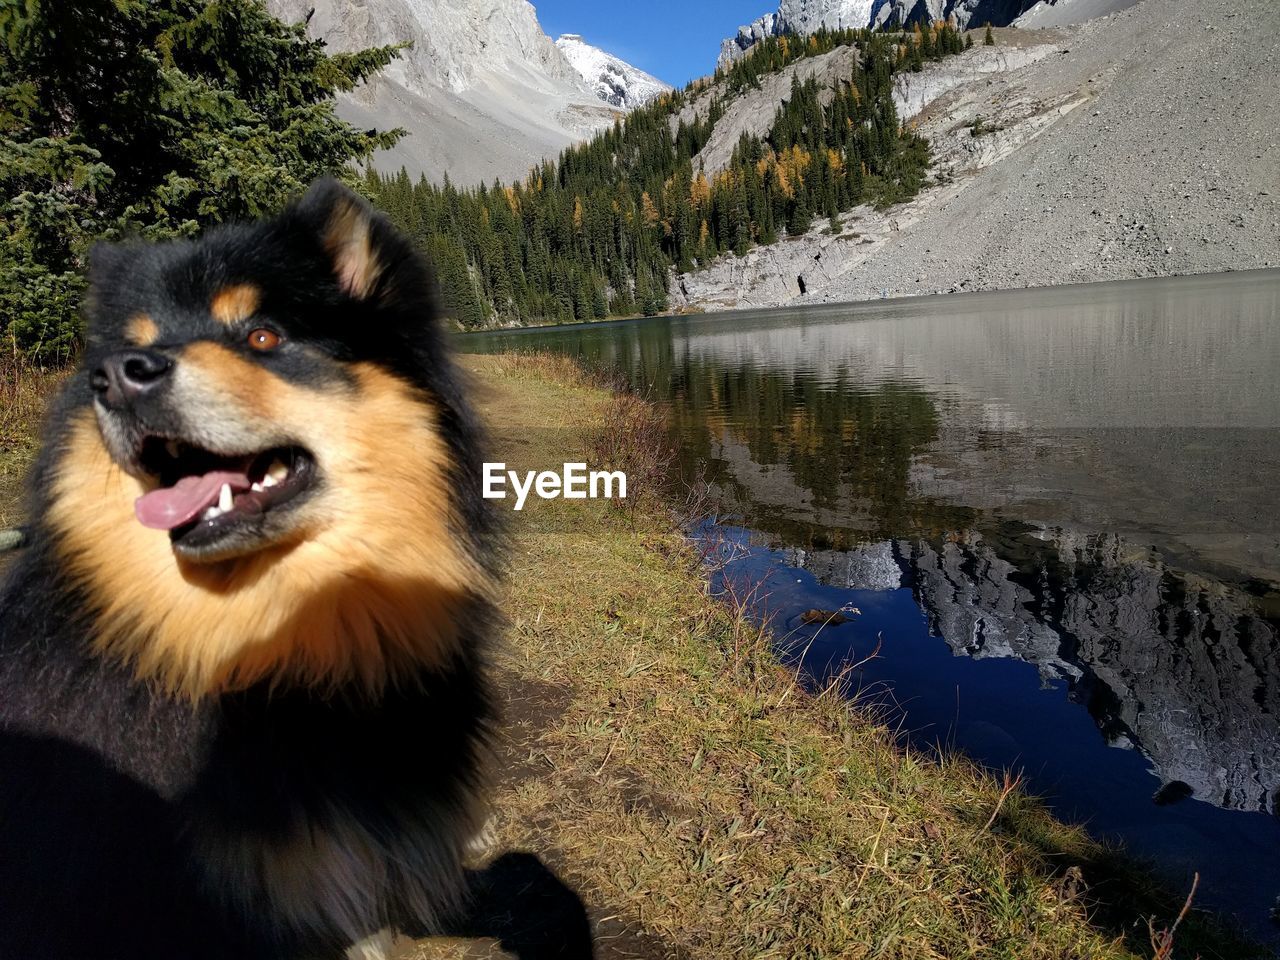 DOG ON LAKE AGAINST MOUNTAIN